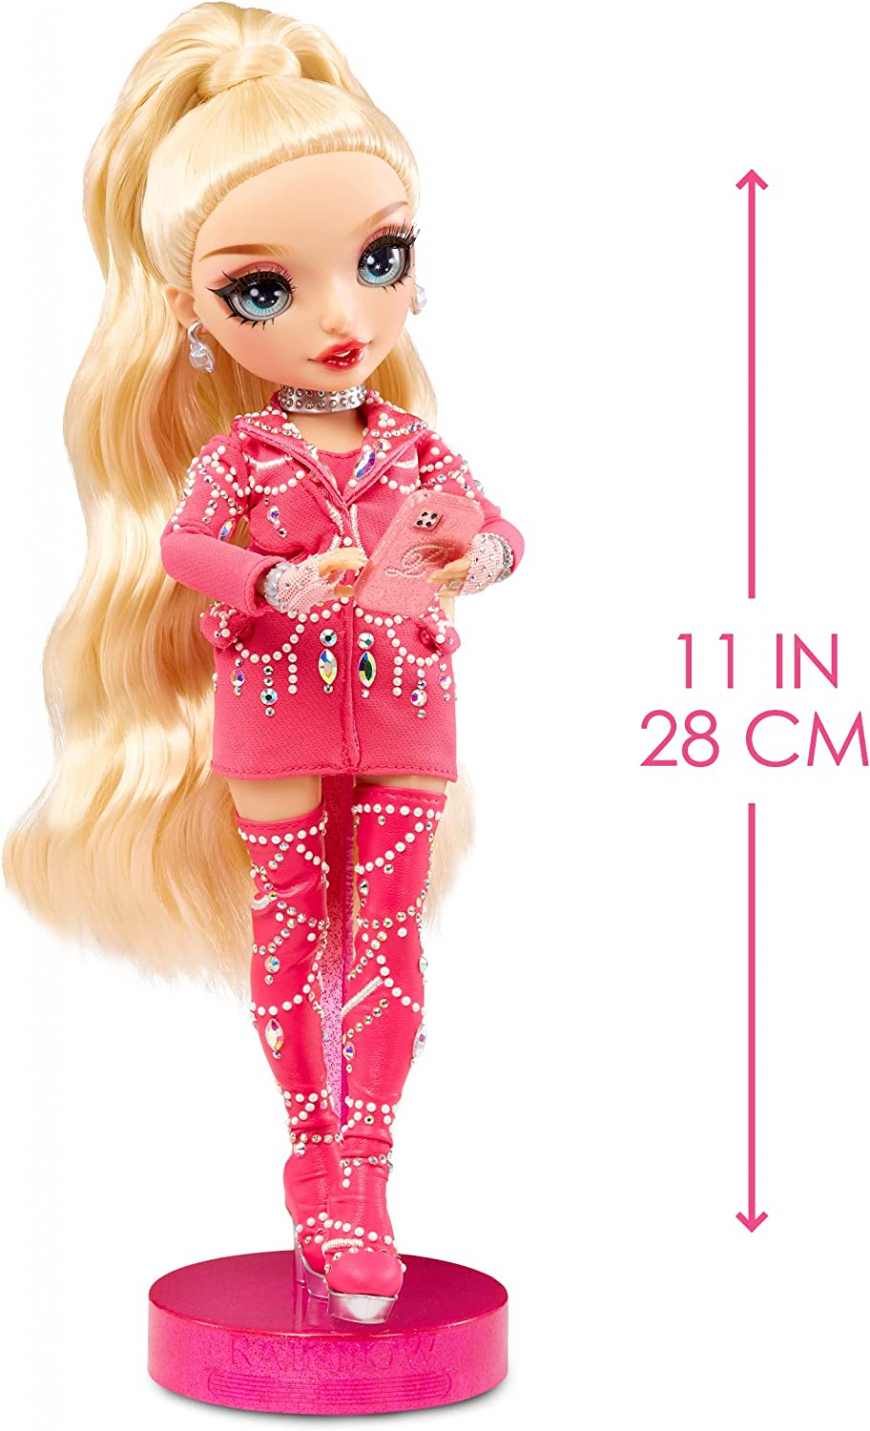 Rainbow High Premium Edition Paris Hilton collector doll